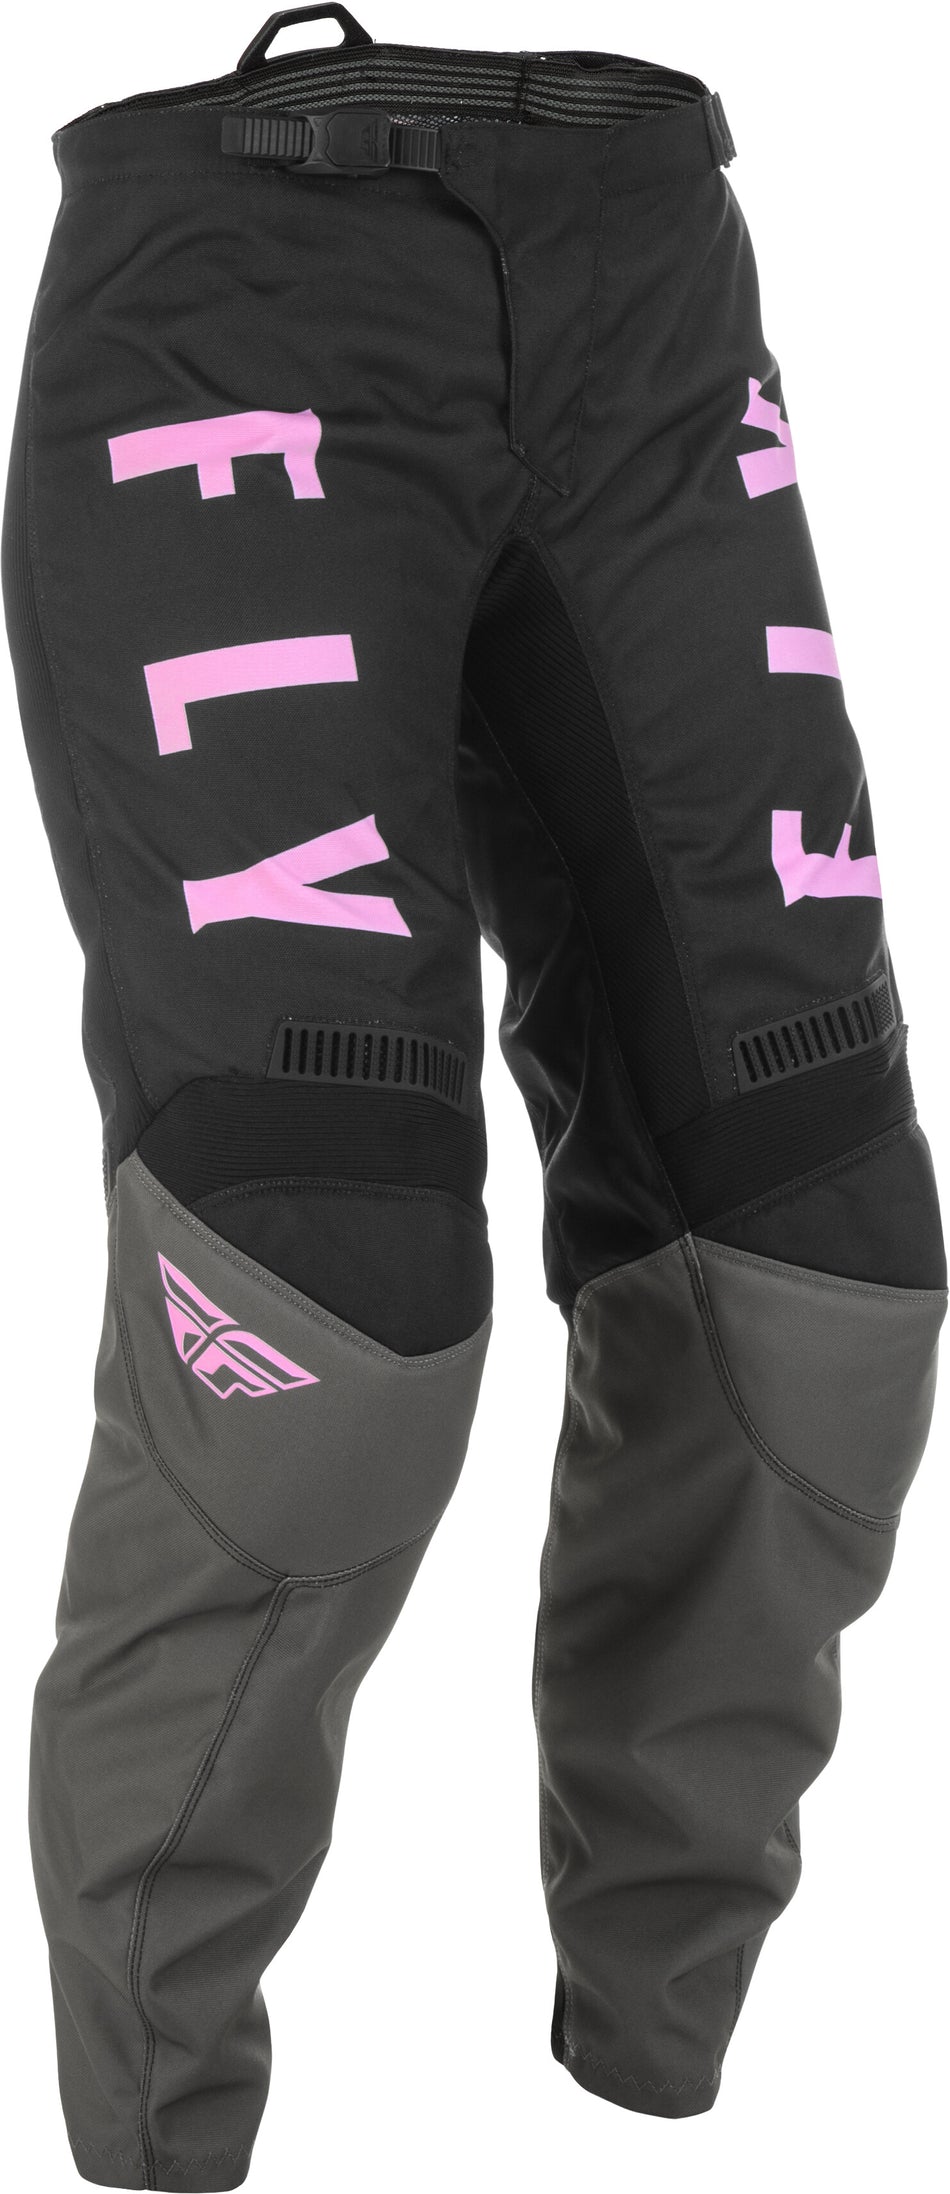 FLY RACING Women's F-16 Pants Grey/Black/Pink Sz 05/06 375-83106